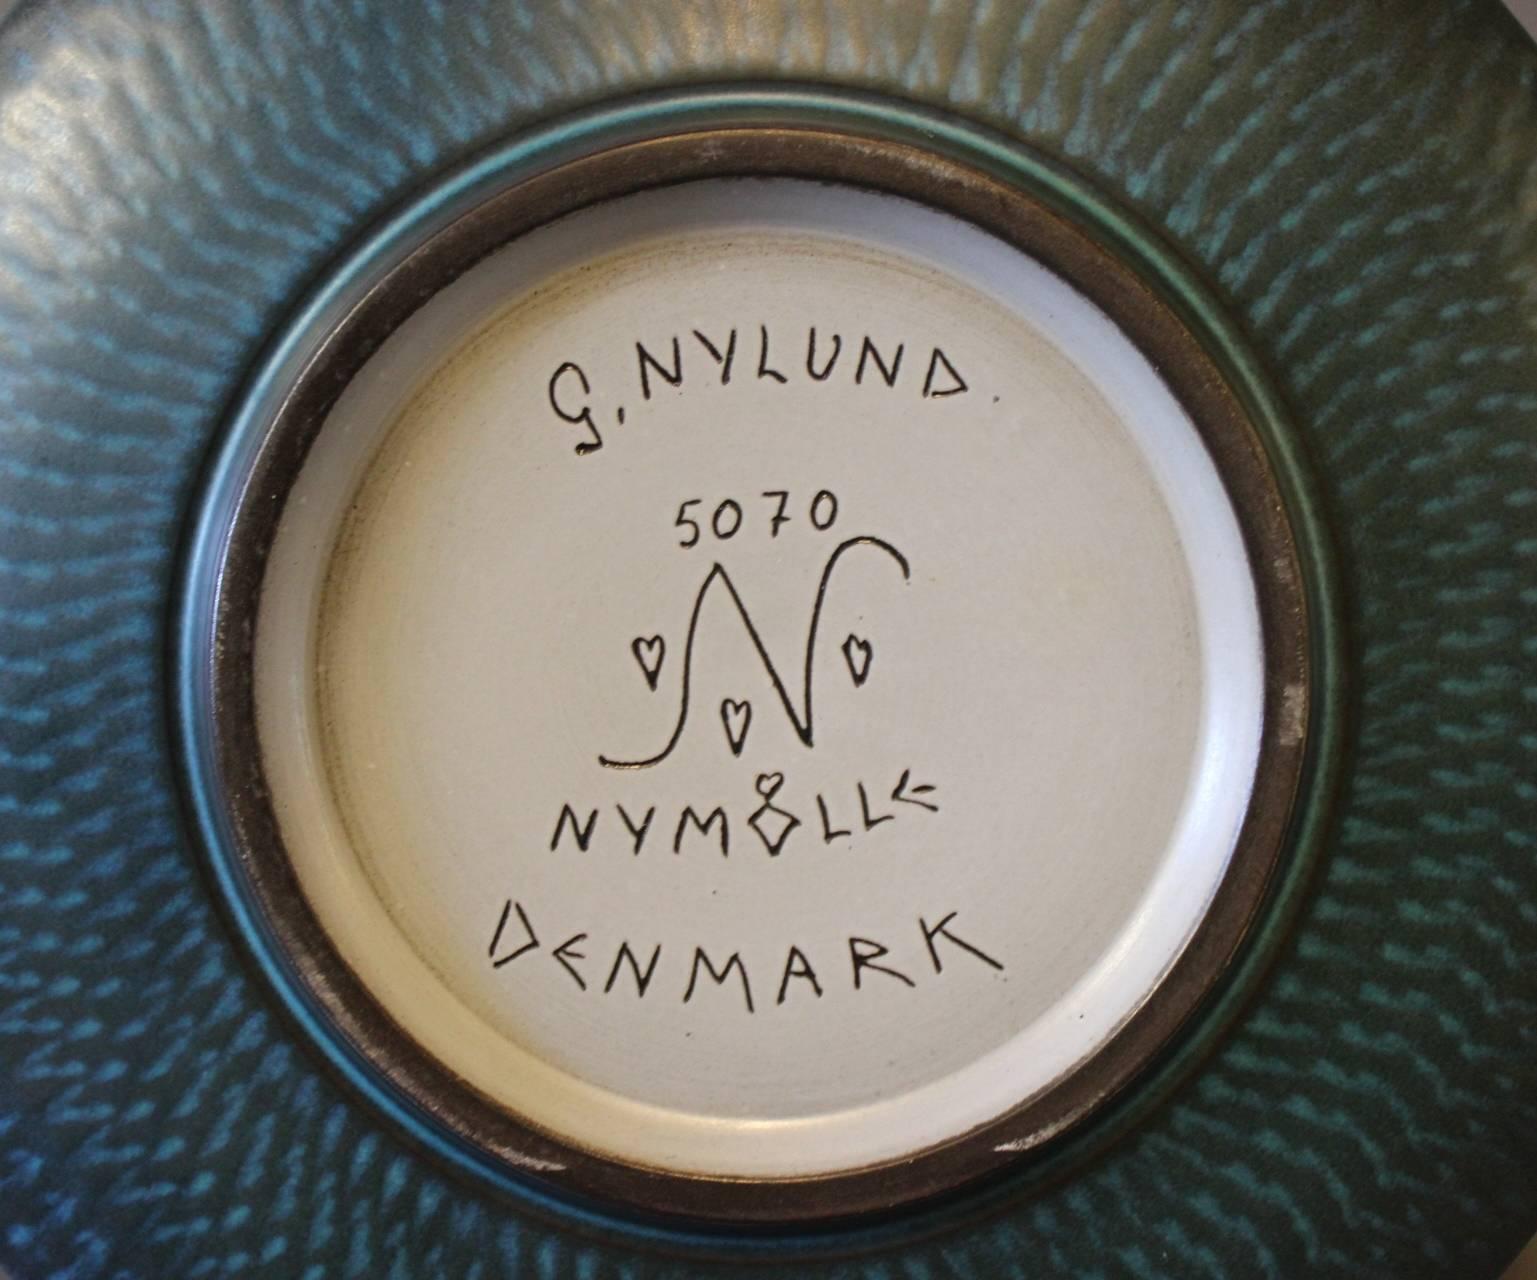 Danish Dark Blue Ceramic Dish by Gunnar Nylund for Nymølle Denmark, Numbered 5070